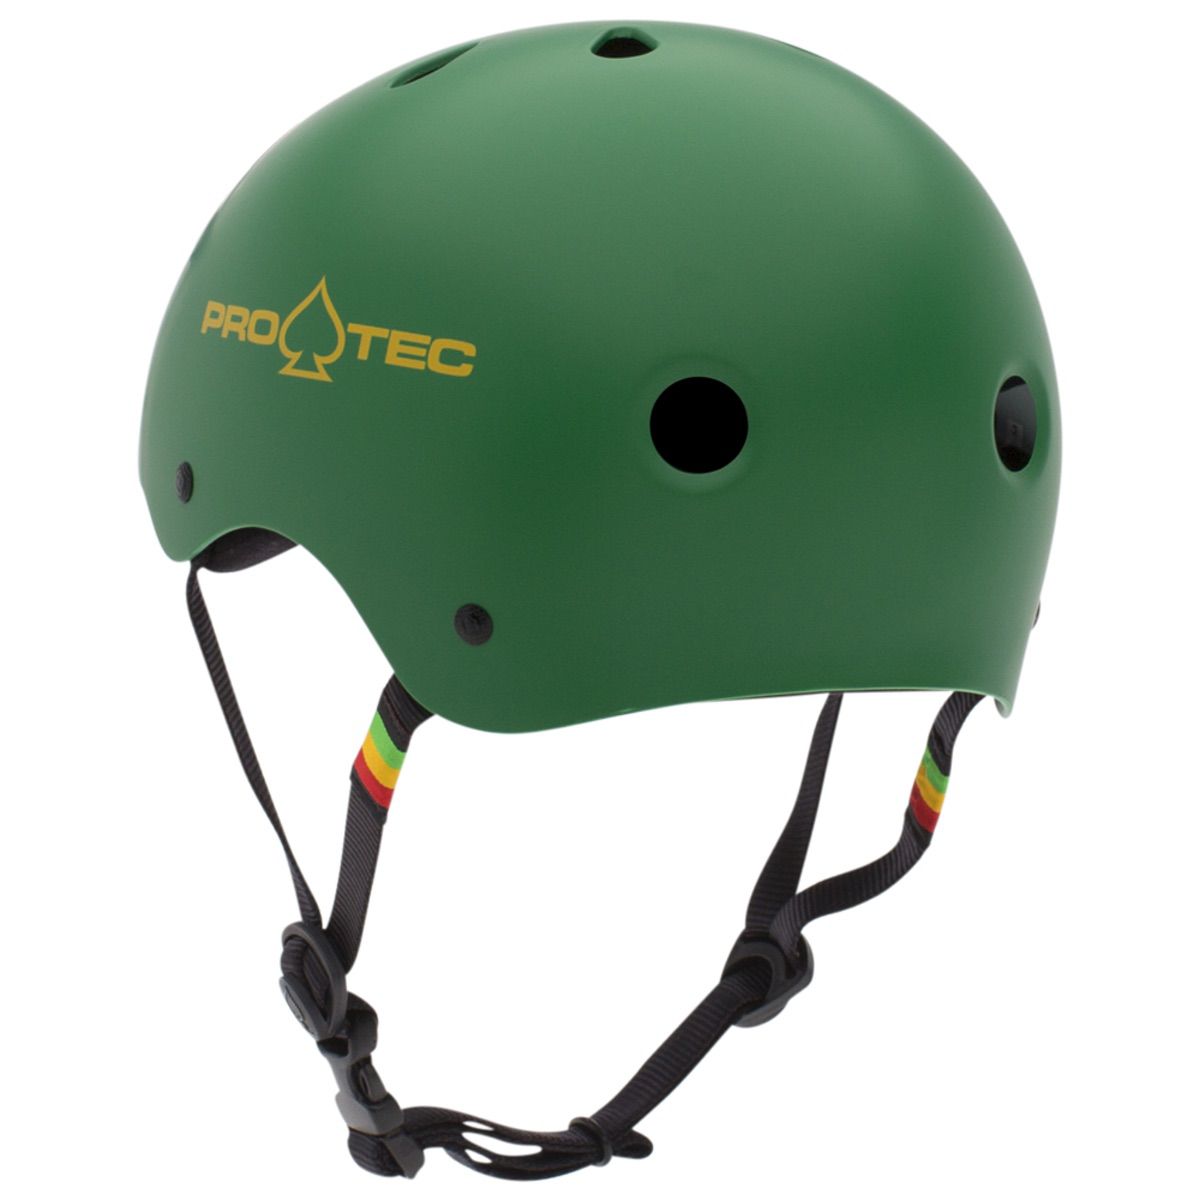 
                  
                    Protective Gear (Skate) - Pro-tec Helmet - Classic Skate - Matte Rasta Green
                  
                